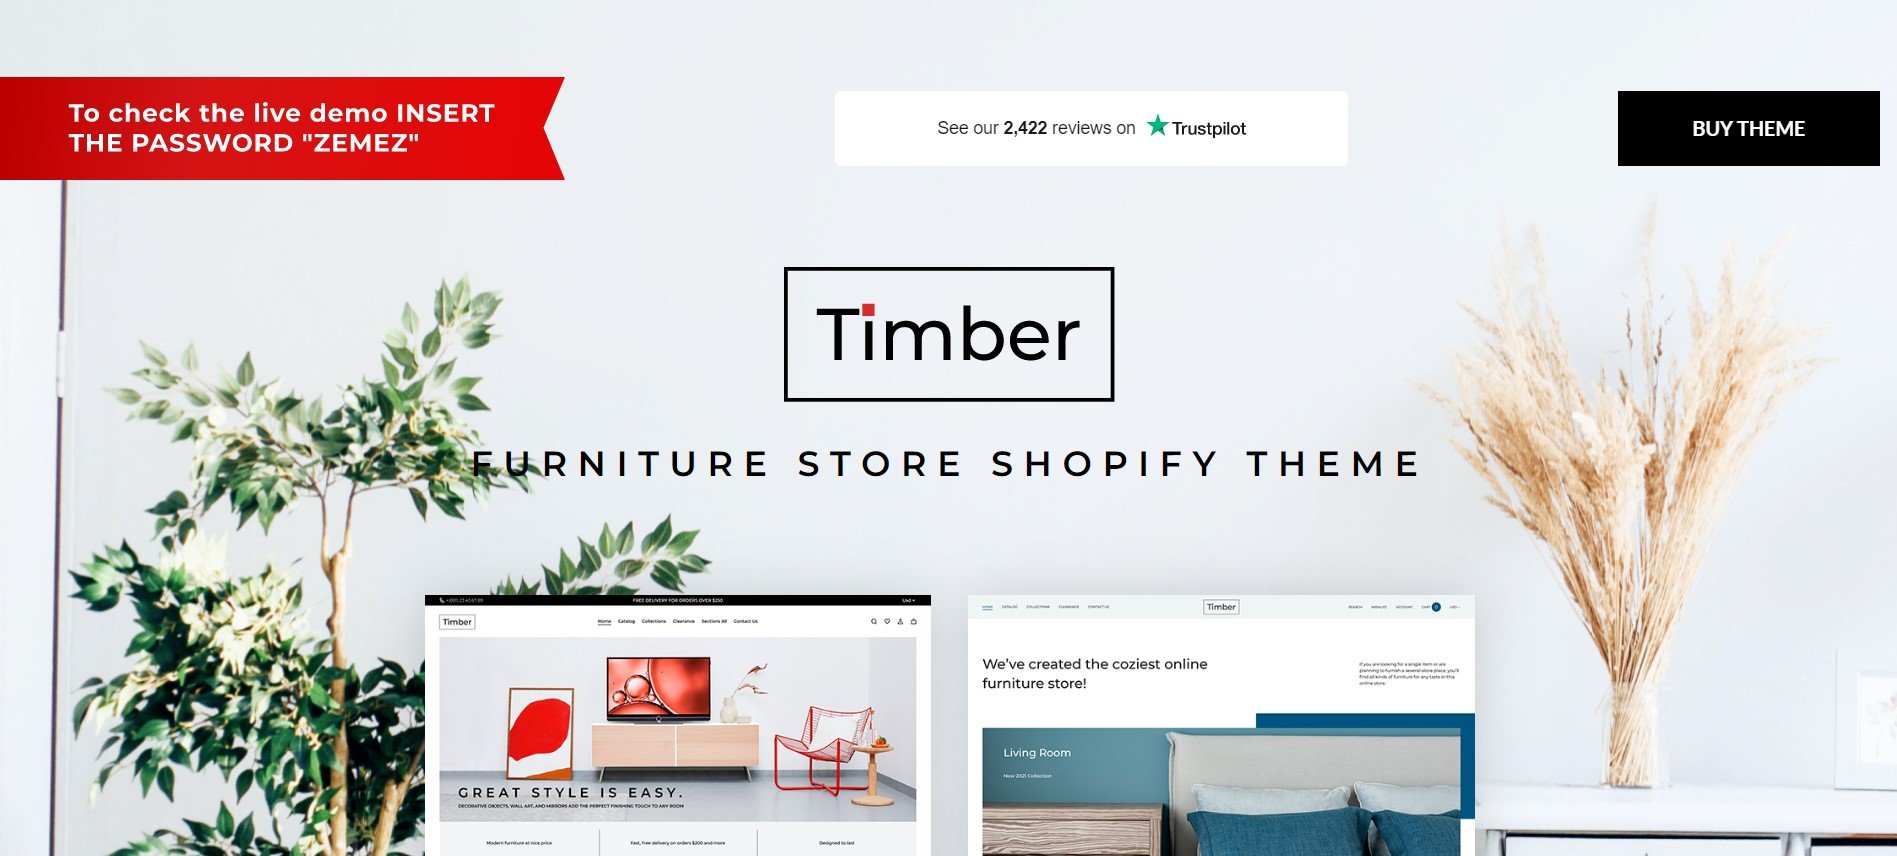 Timber Shopify furniture theme